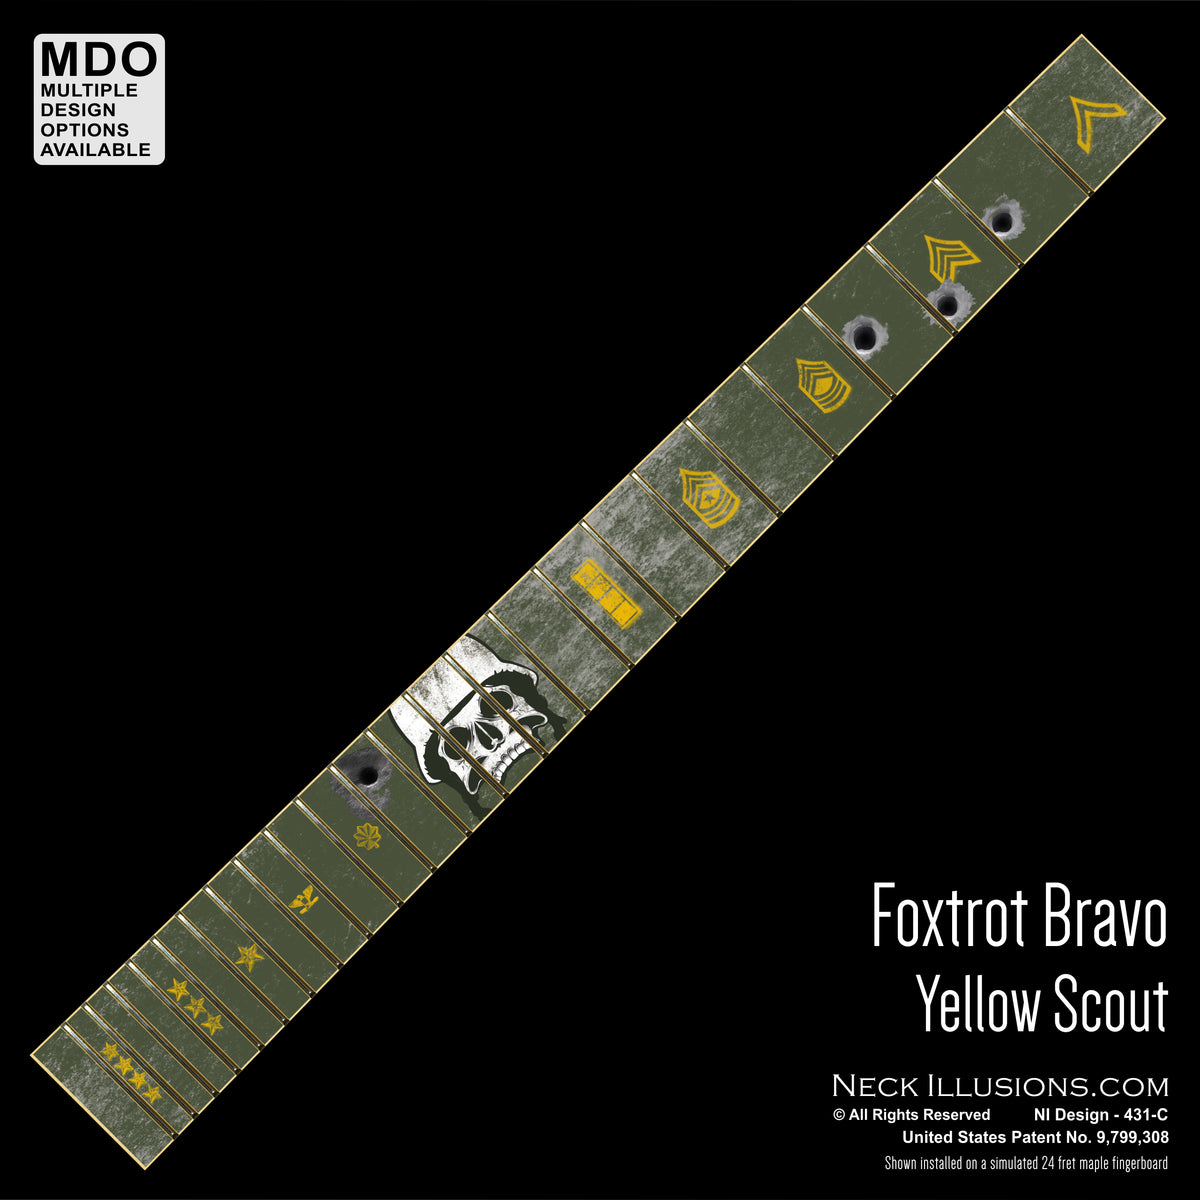 Foxtrot Bravo